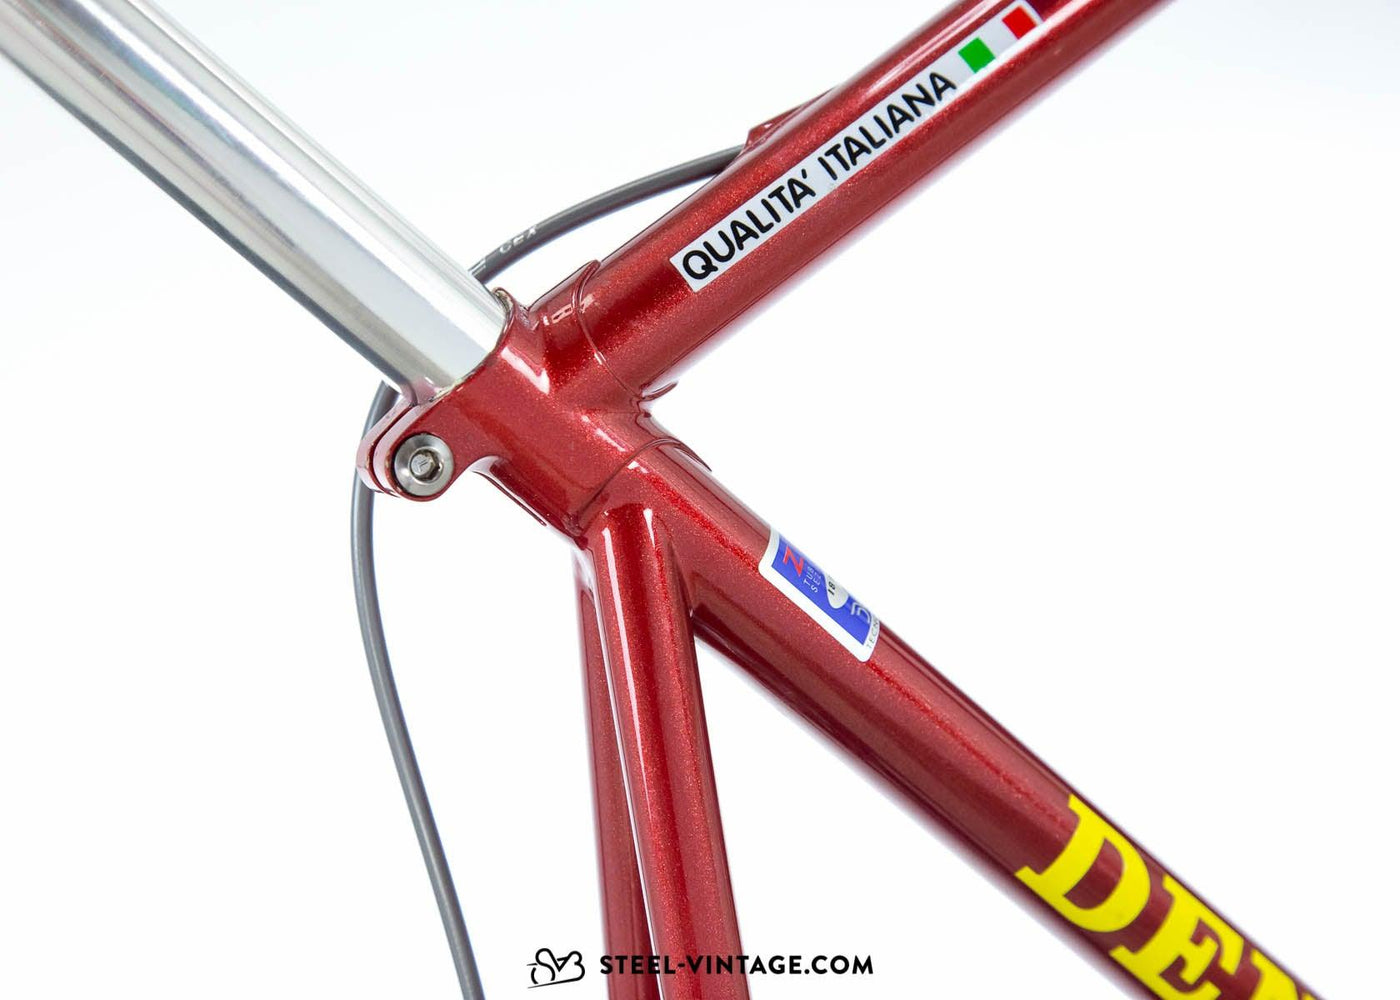 Denti Solo Neo-Retro Road Bike - Steel Vintage Bikes